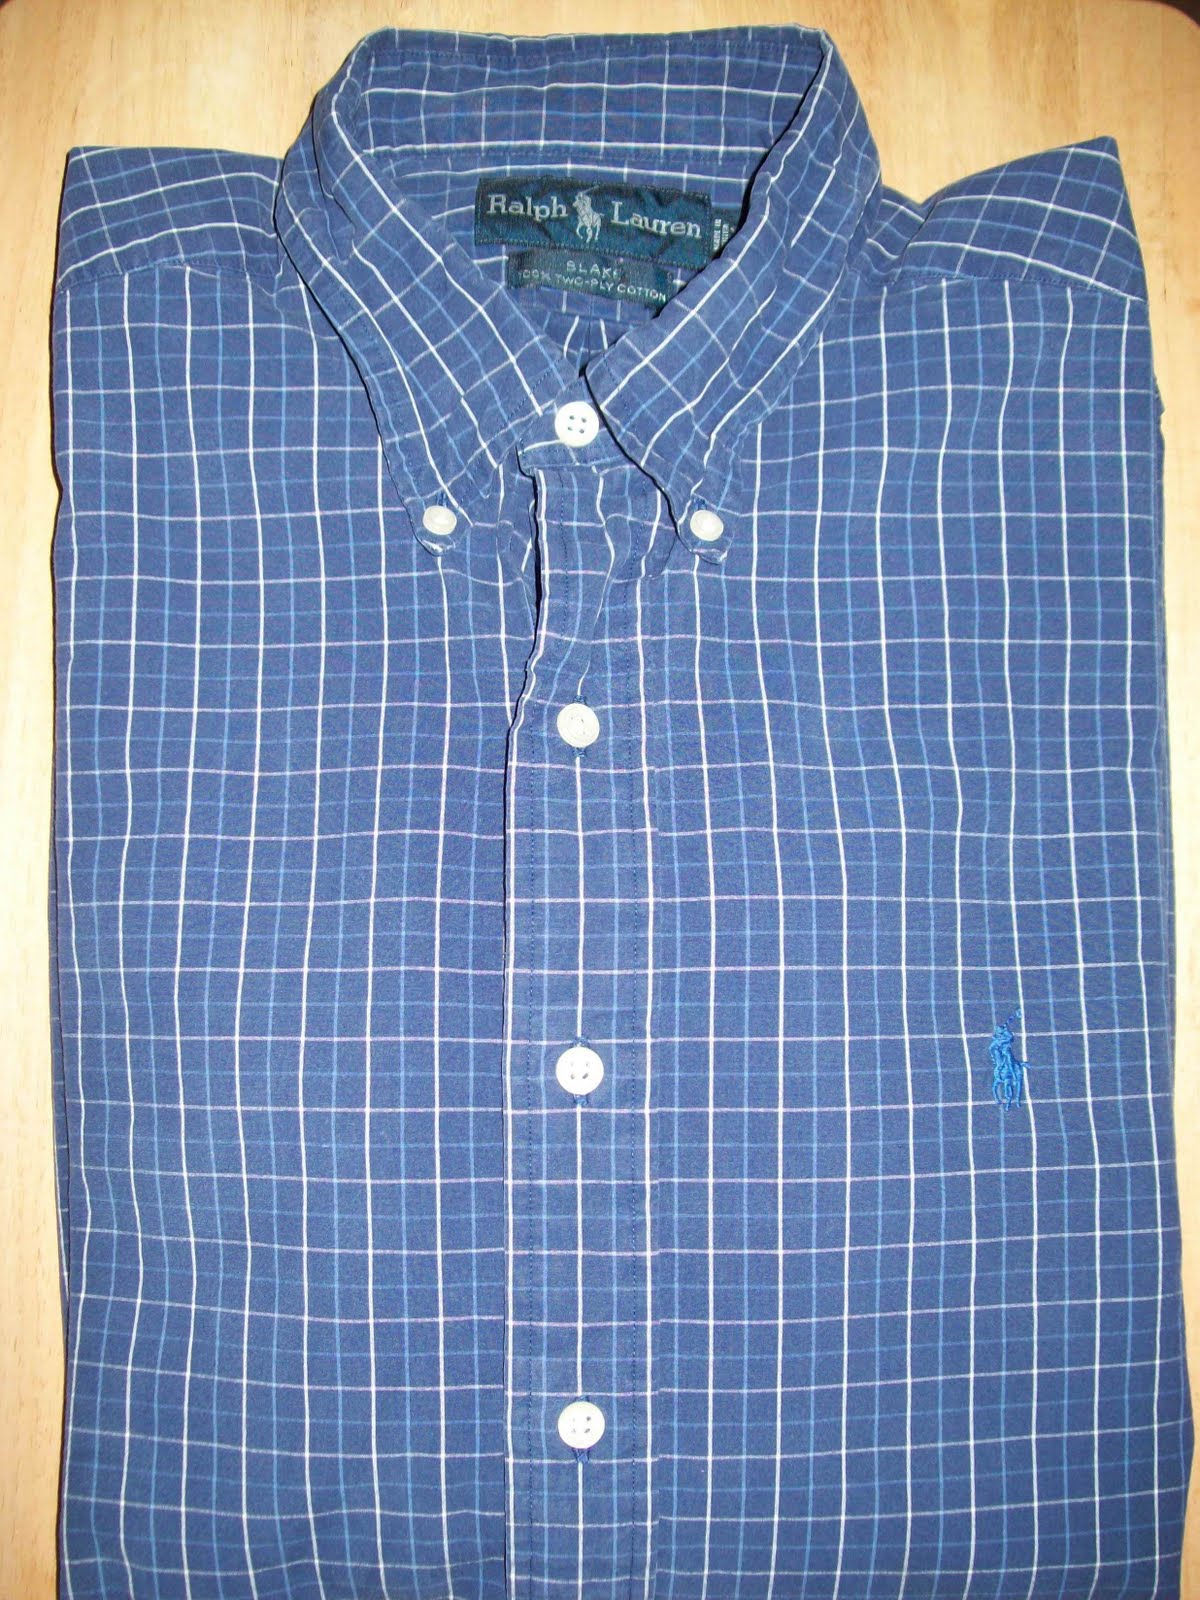 VintageMens: Ralph Lauren Blue and White Checked Blake Shirt, XLarge